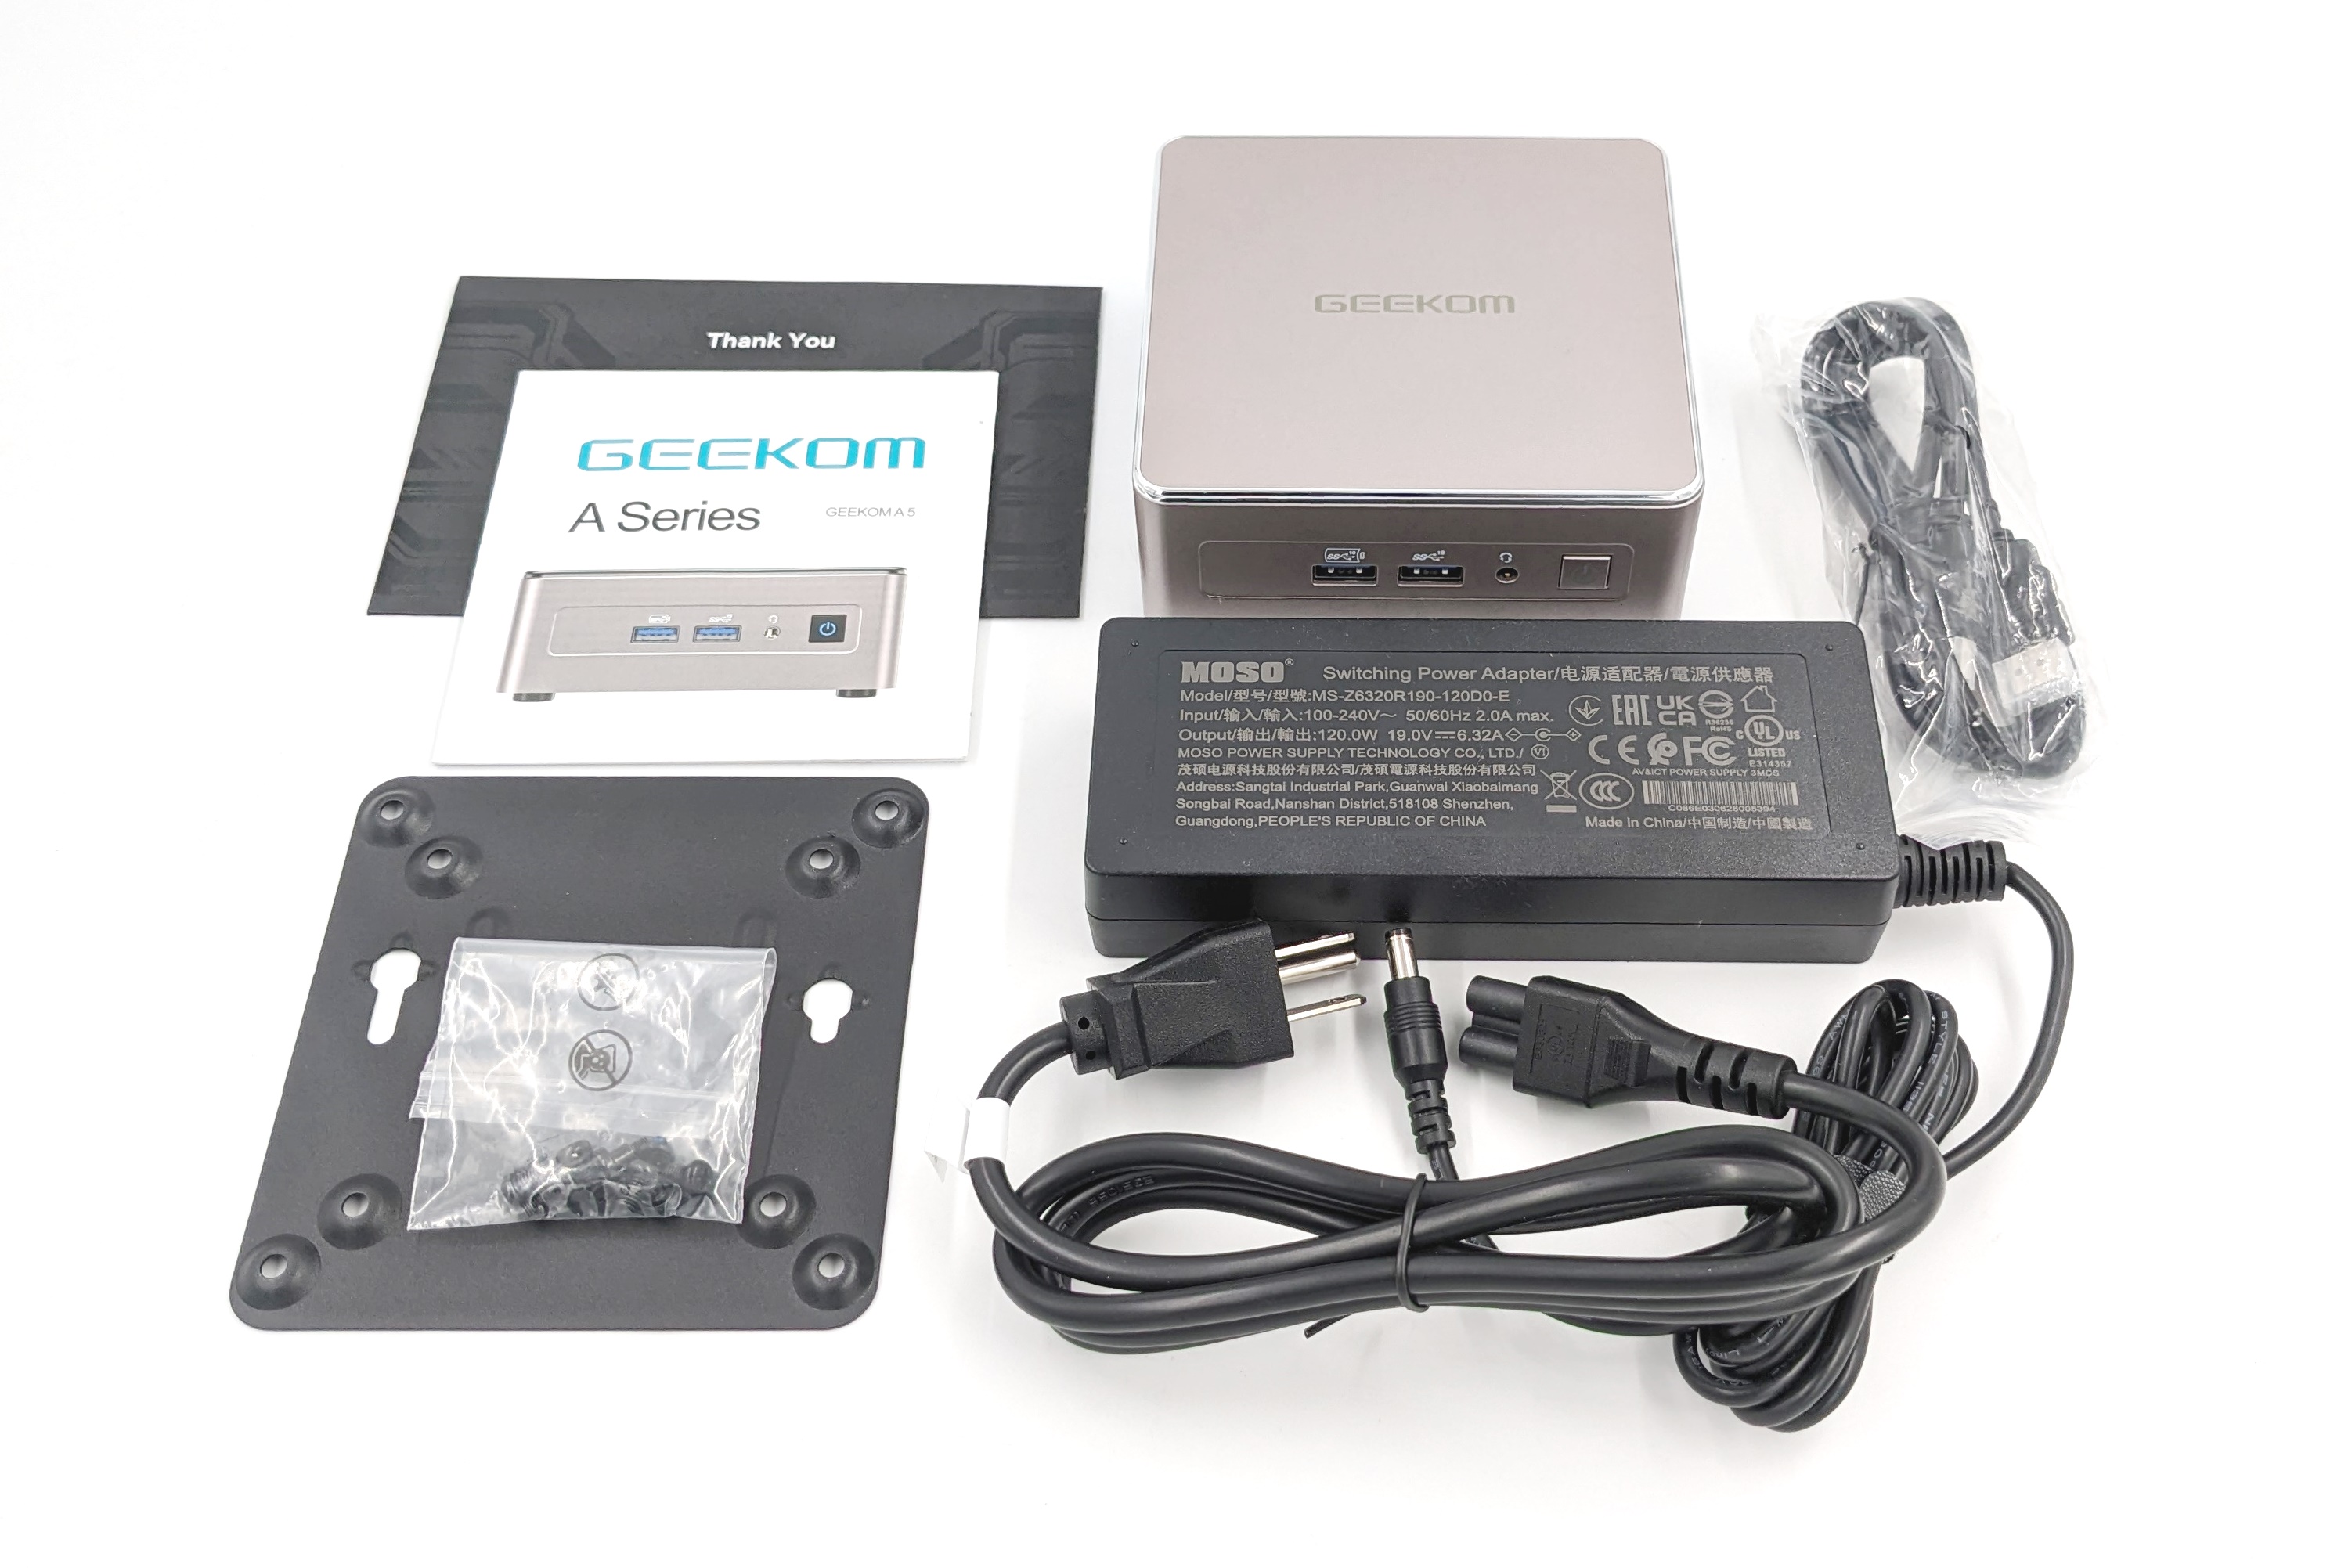 GEEKOM A5 mini-PC Review: Affordable Cezanne Zen 3 at 35W